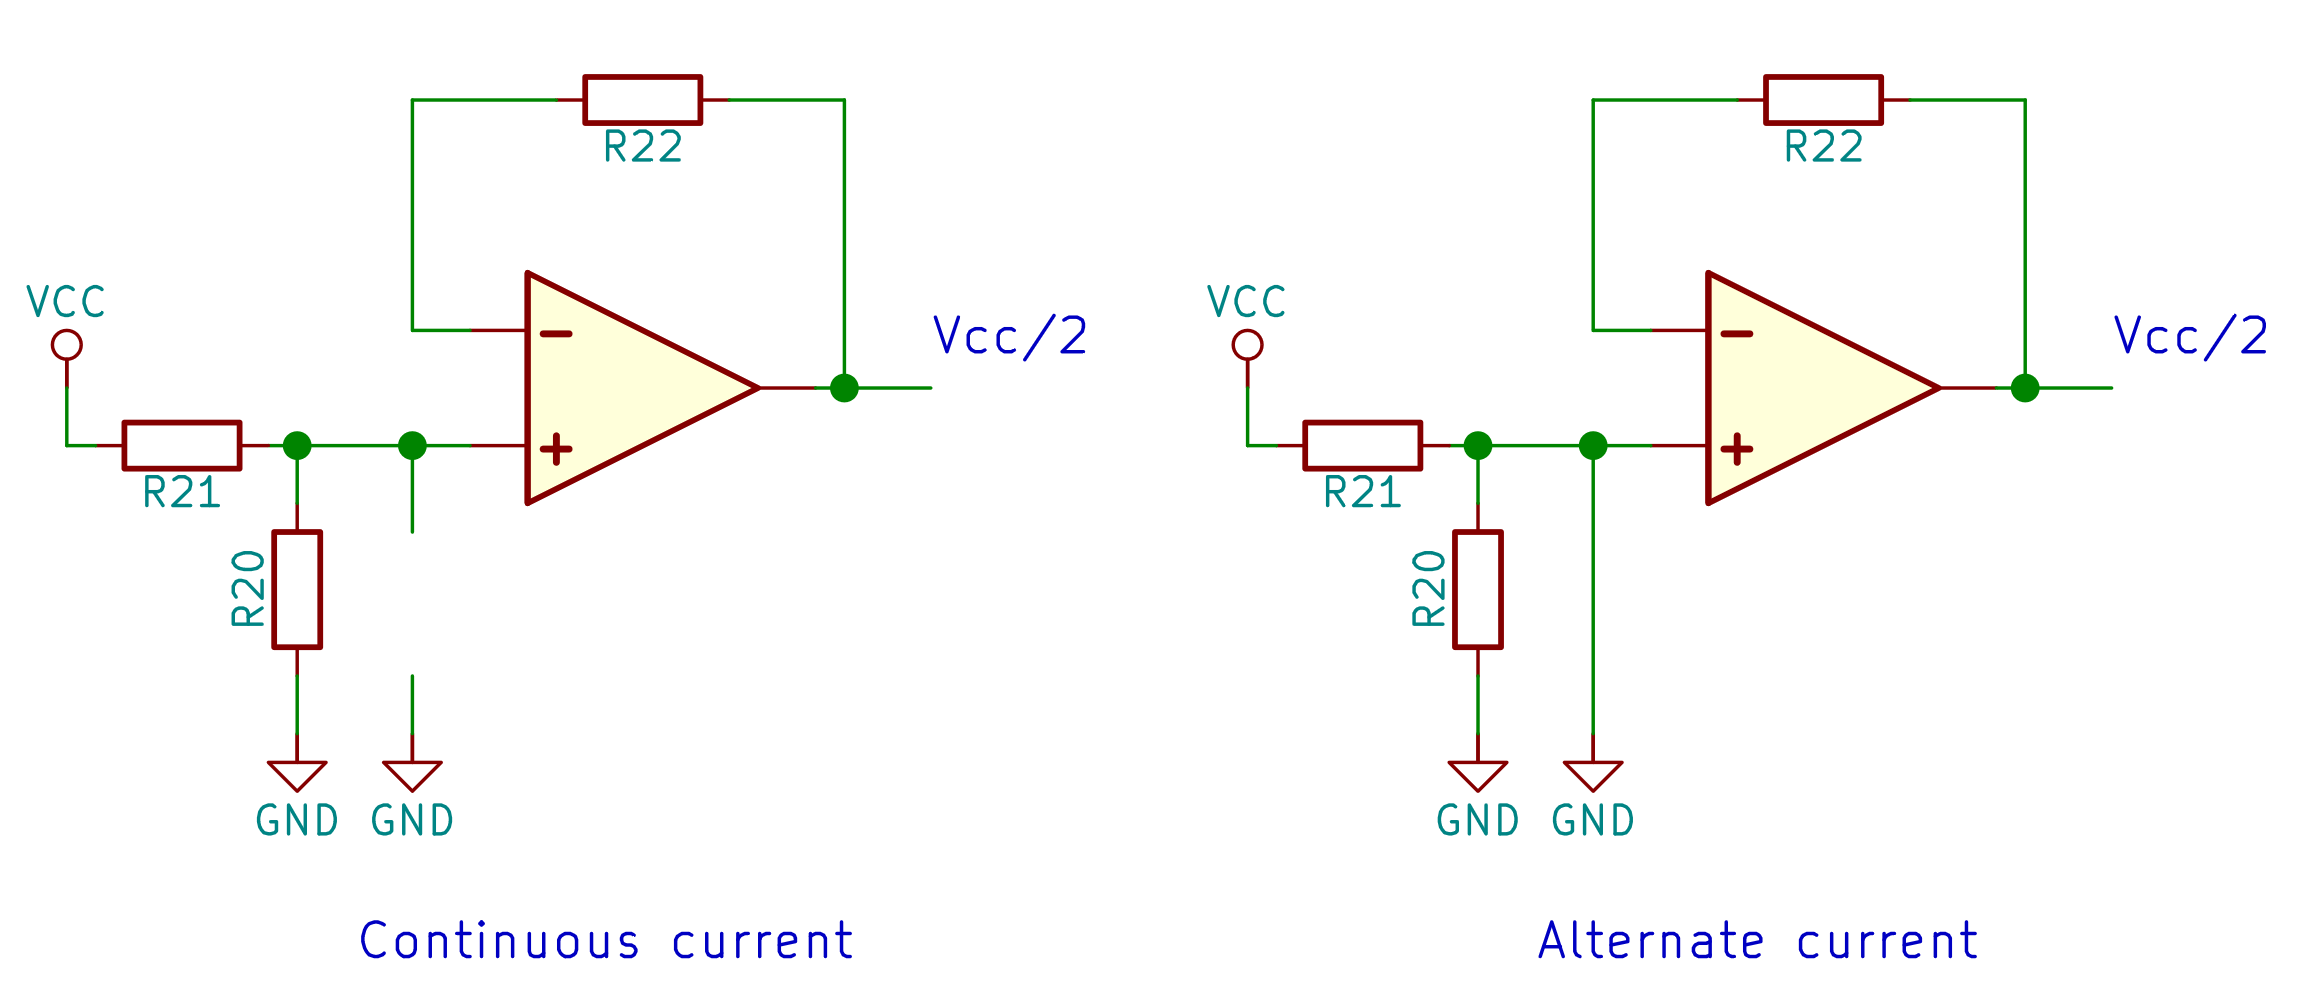 Bypass capacitor behaviour